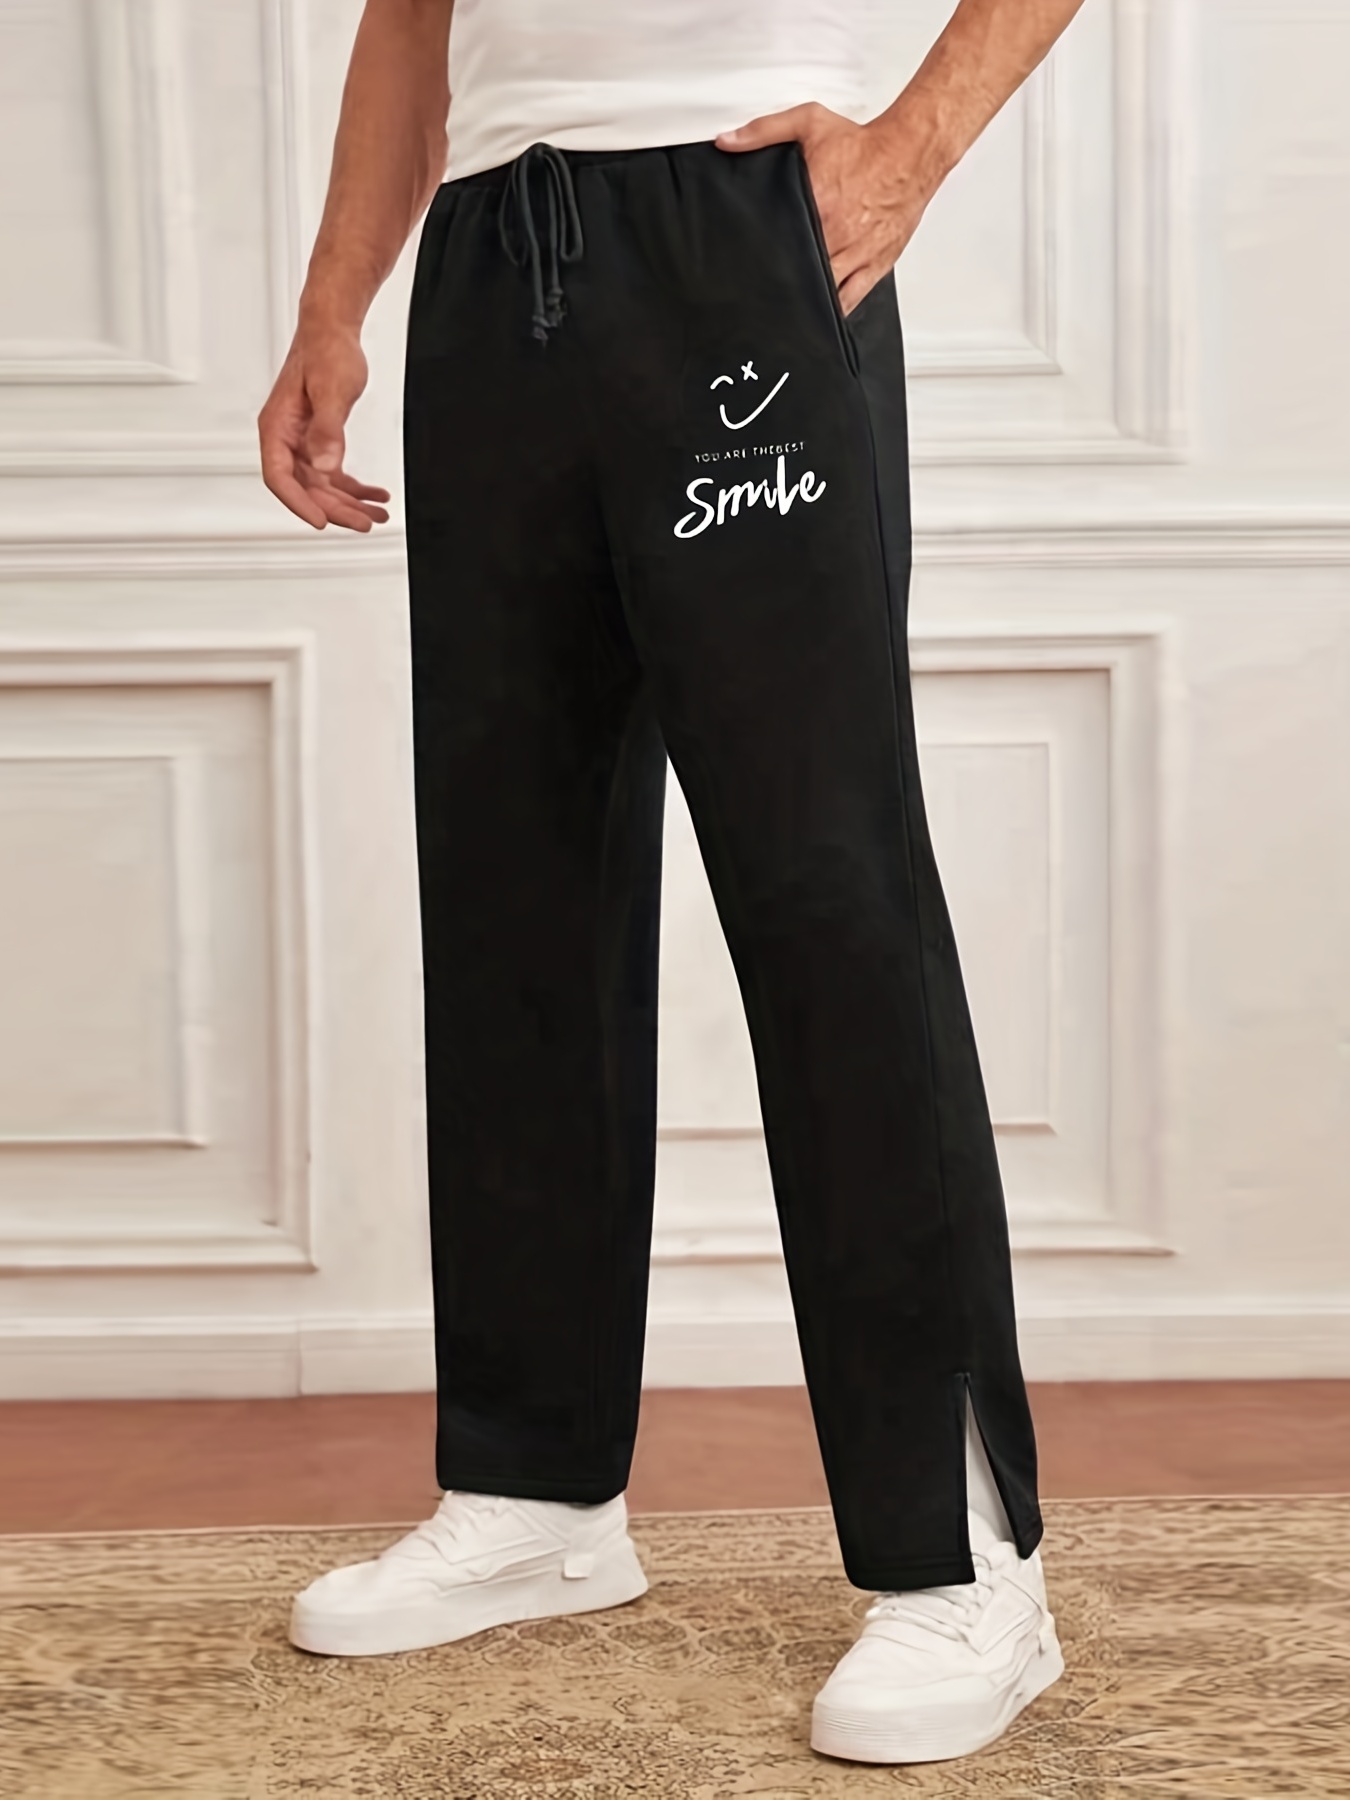 Pheidole Mens Fashion Smile Face Graphic Casual Pants Plus Size